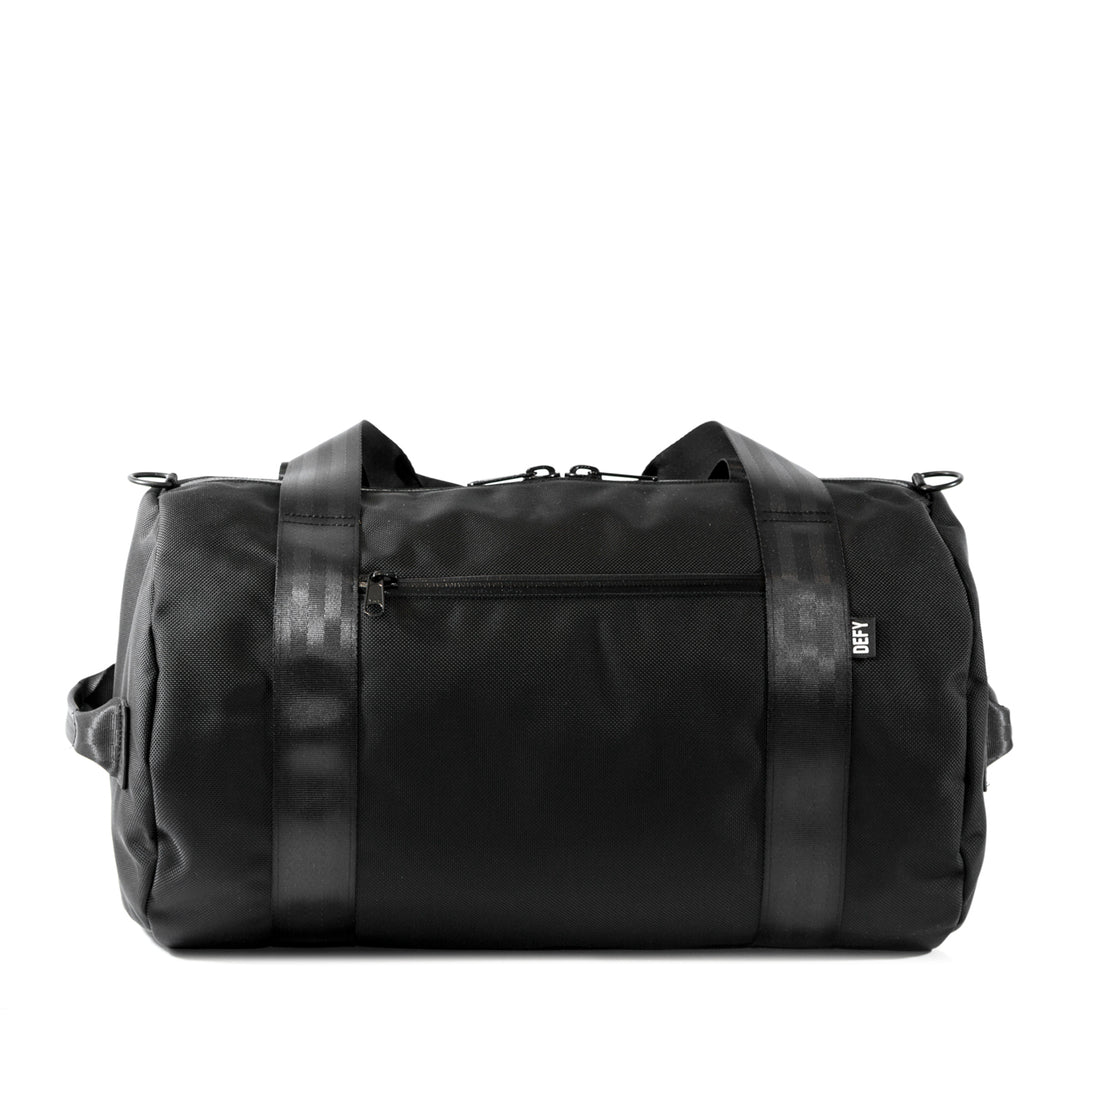 The Ultimate Overnighter Duffel Bag | Black Ballistic Nylon – DEFY